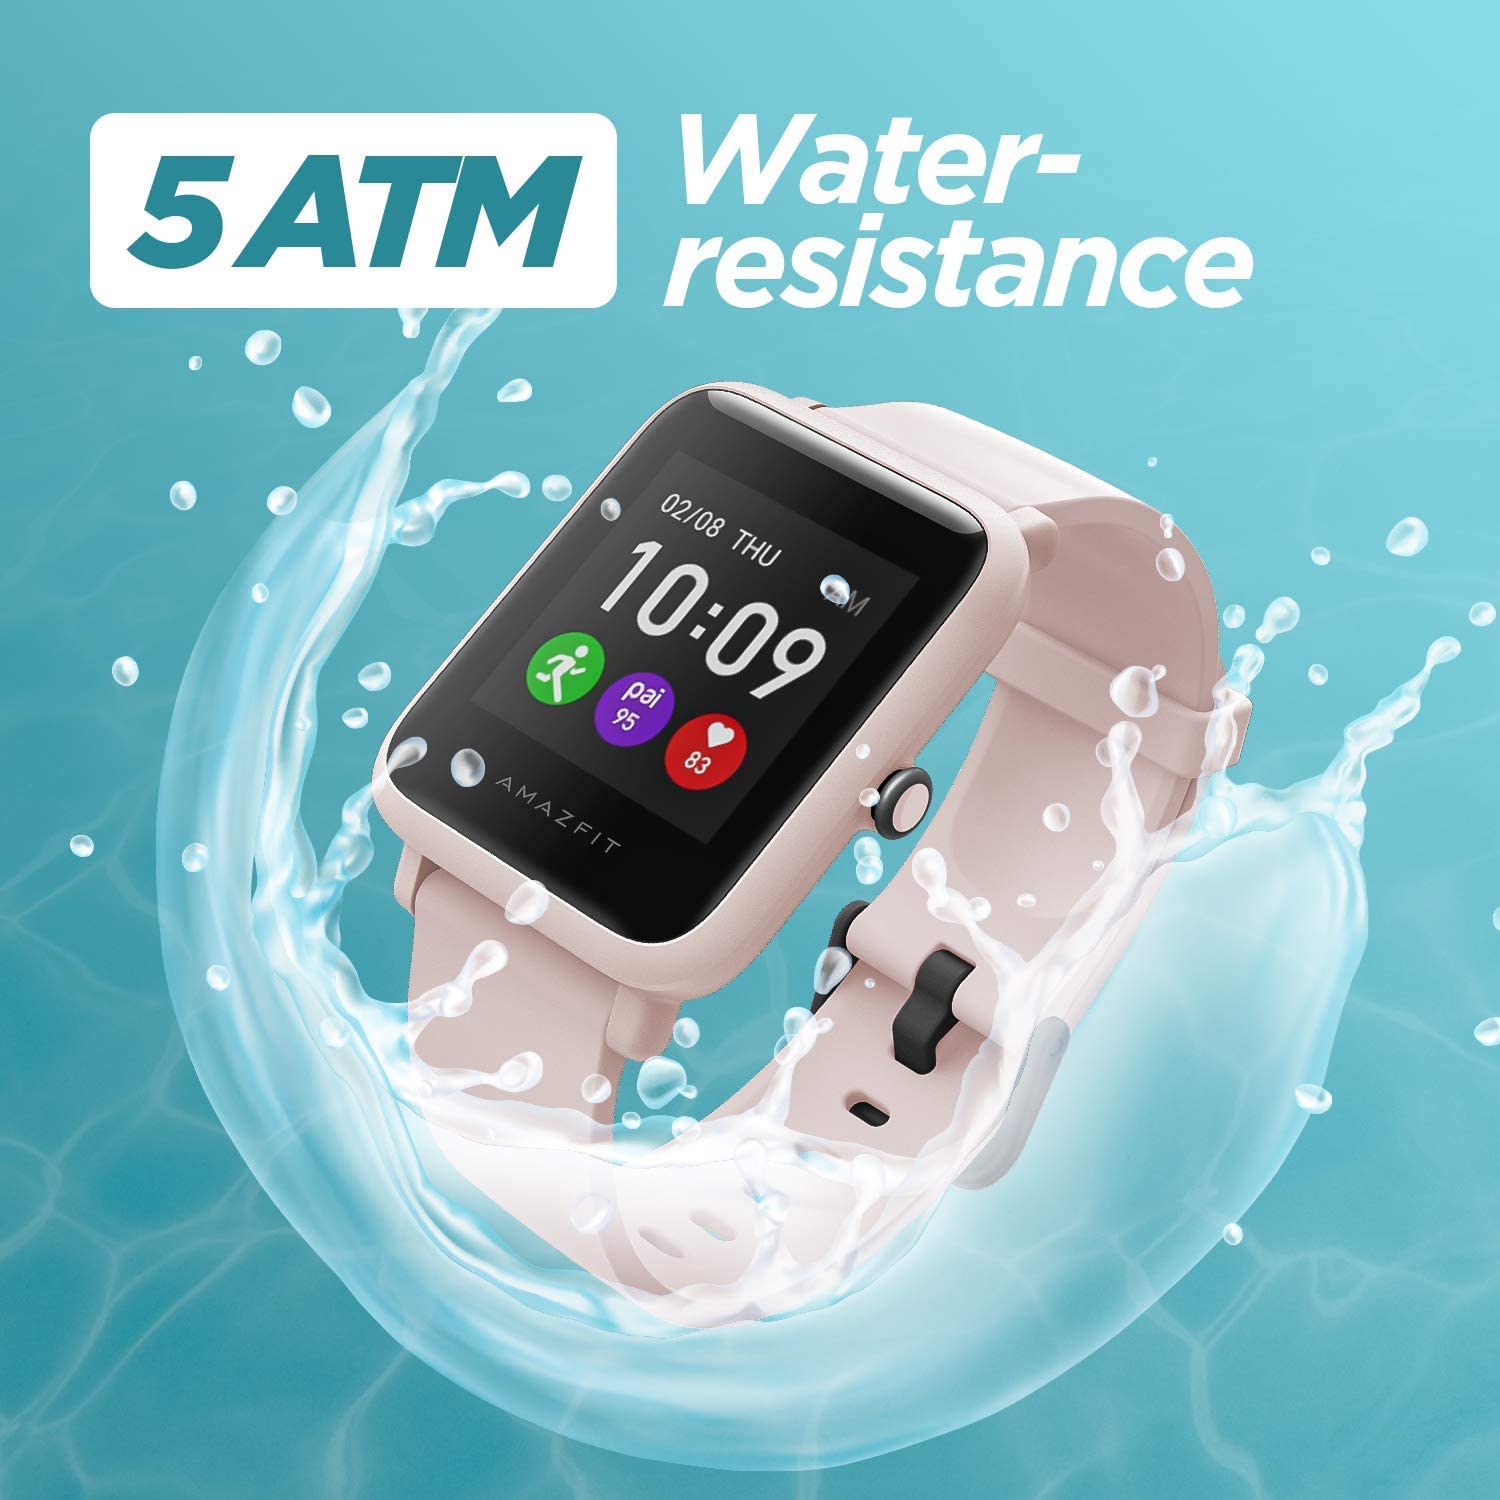 Amazfit Bip S Lite Smartwatch Fitness Watch (Charcoal Black)